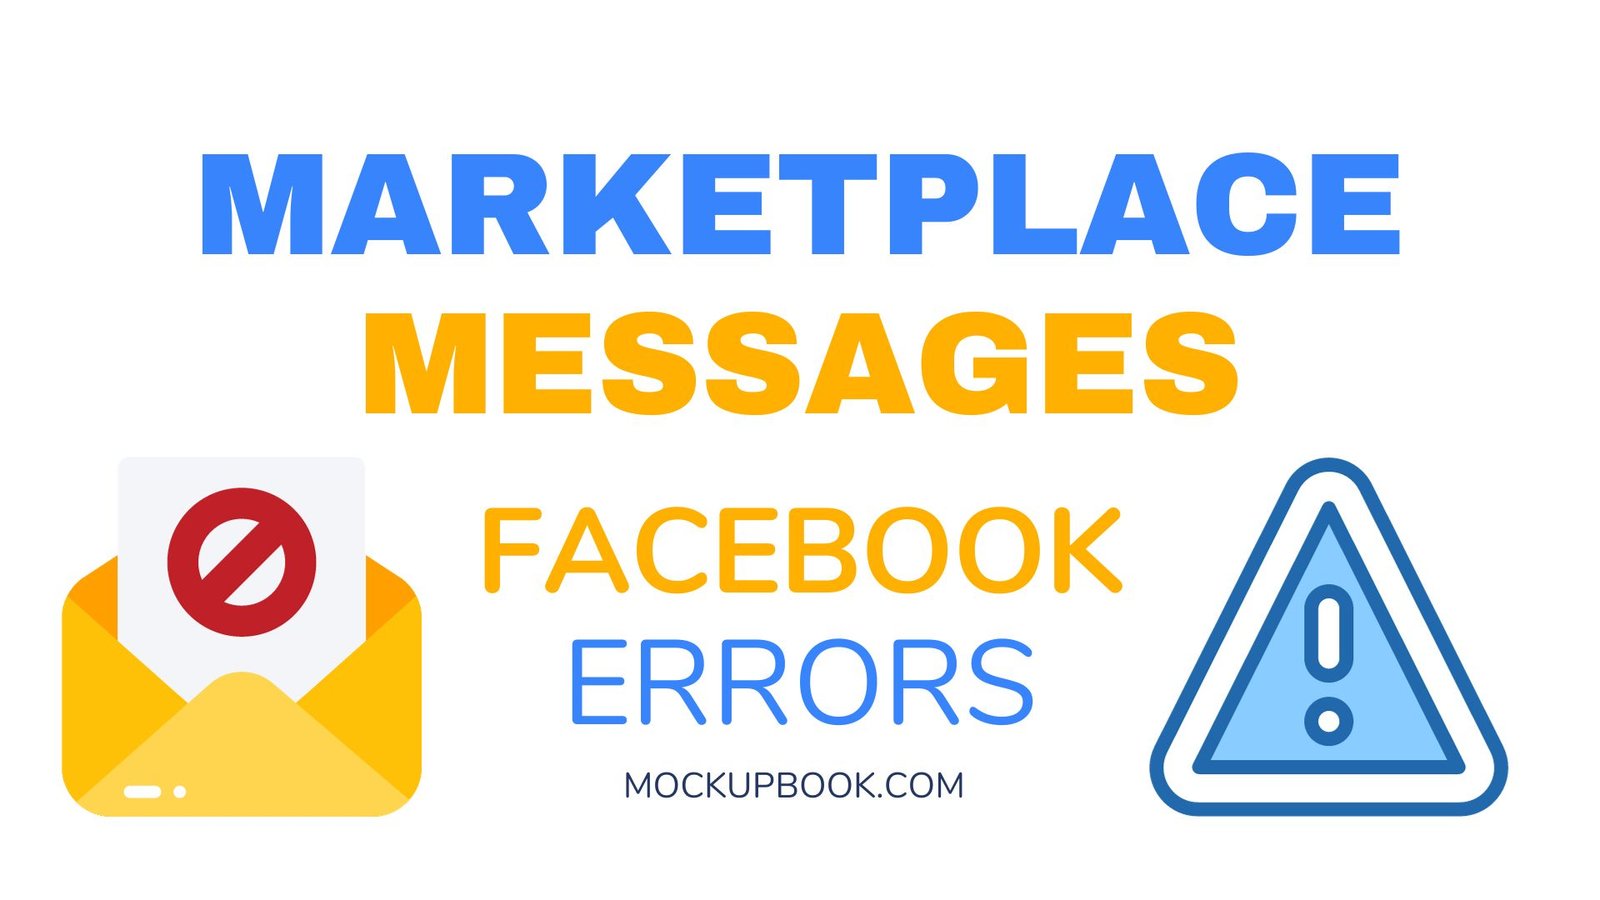 Marketplace Messages